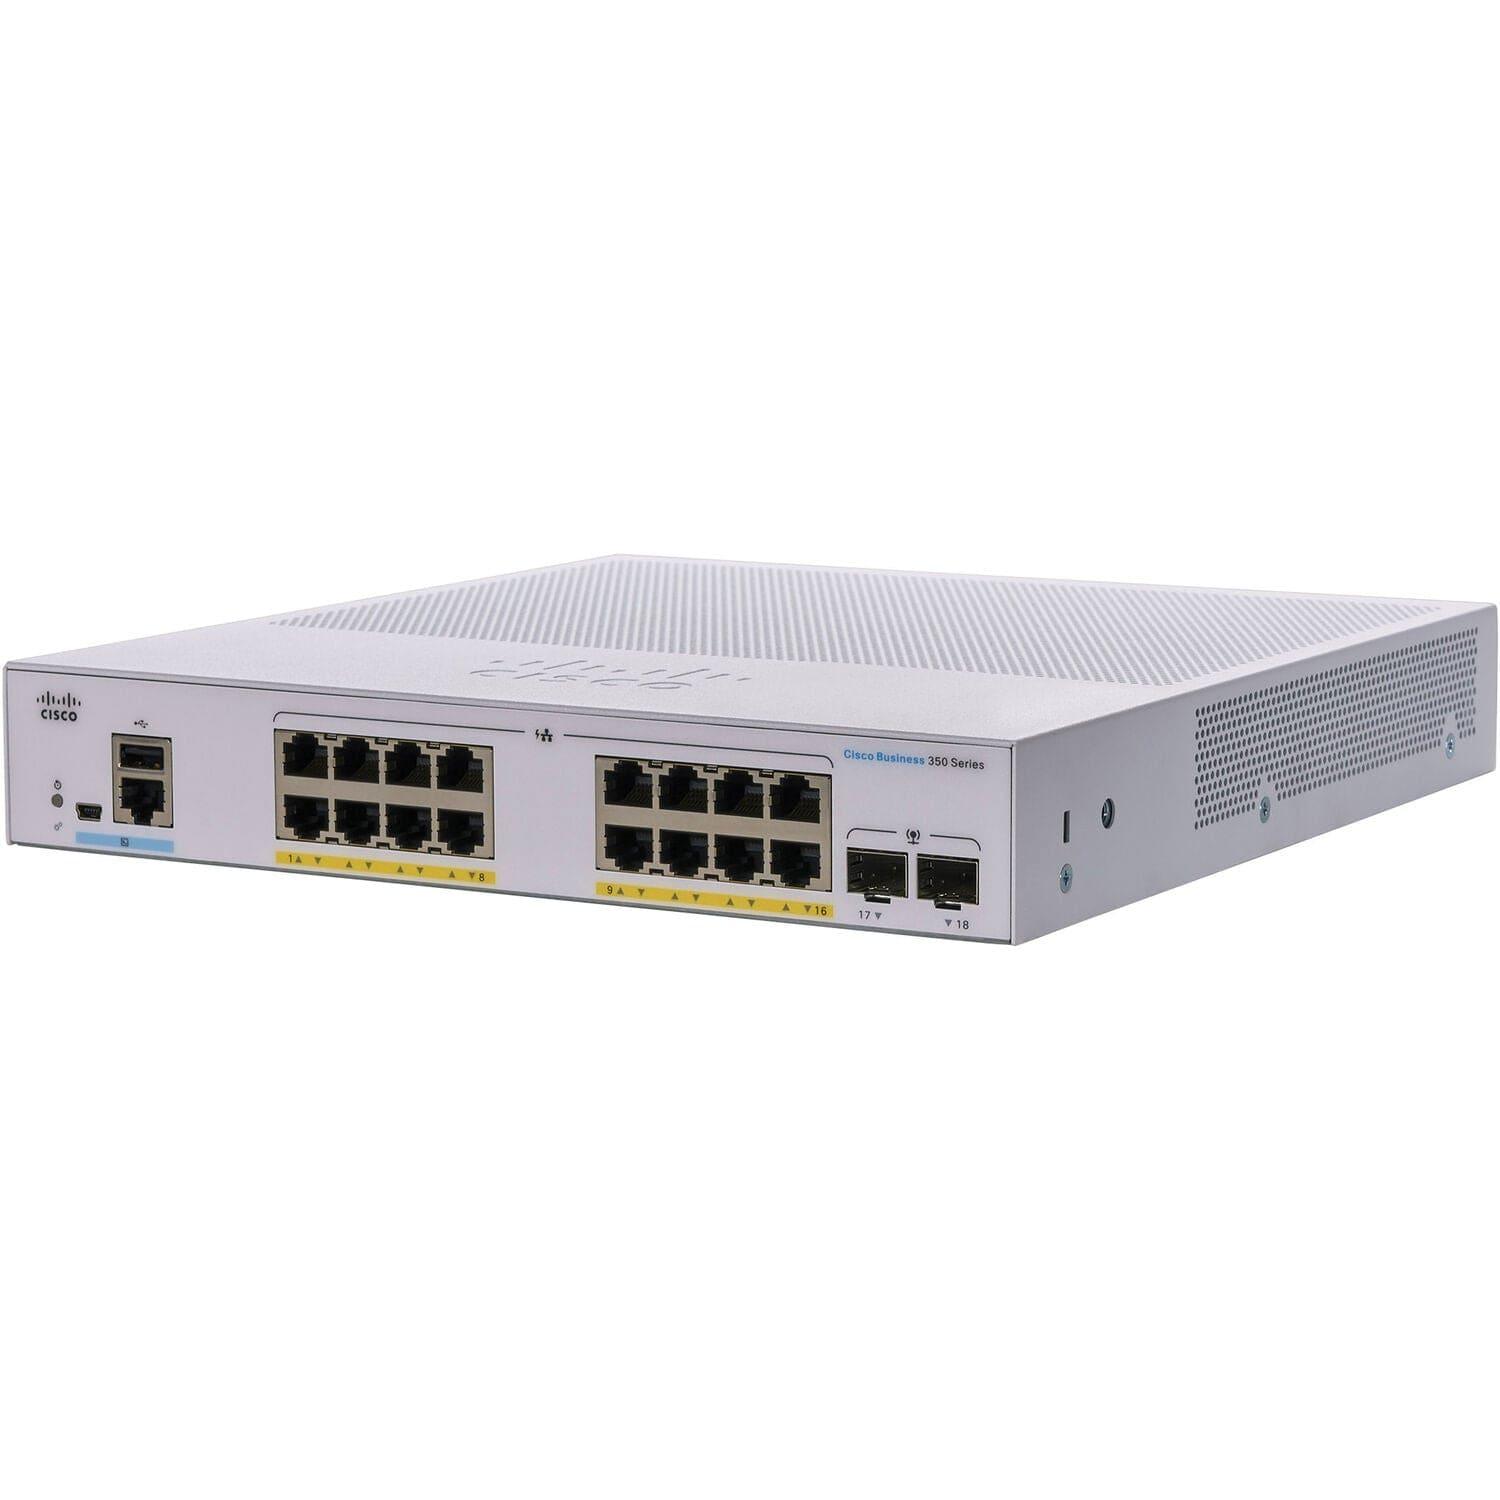 Cisco Business 350 Series 16 10/100/1000 Port PoE+ Managed Switch w/ 2 Gigabit SFP - CBS350-16P-2G-NA Refurbished - CBS350-16P-2G-NA-R - Reef Telecom